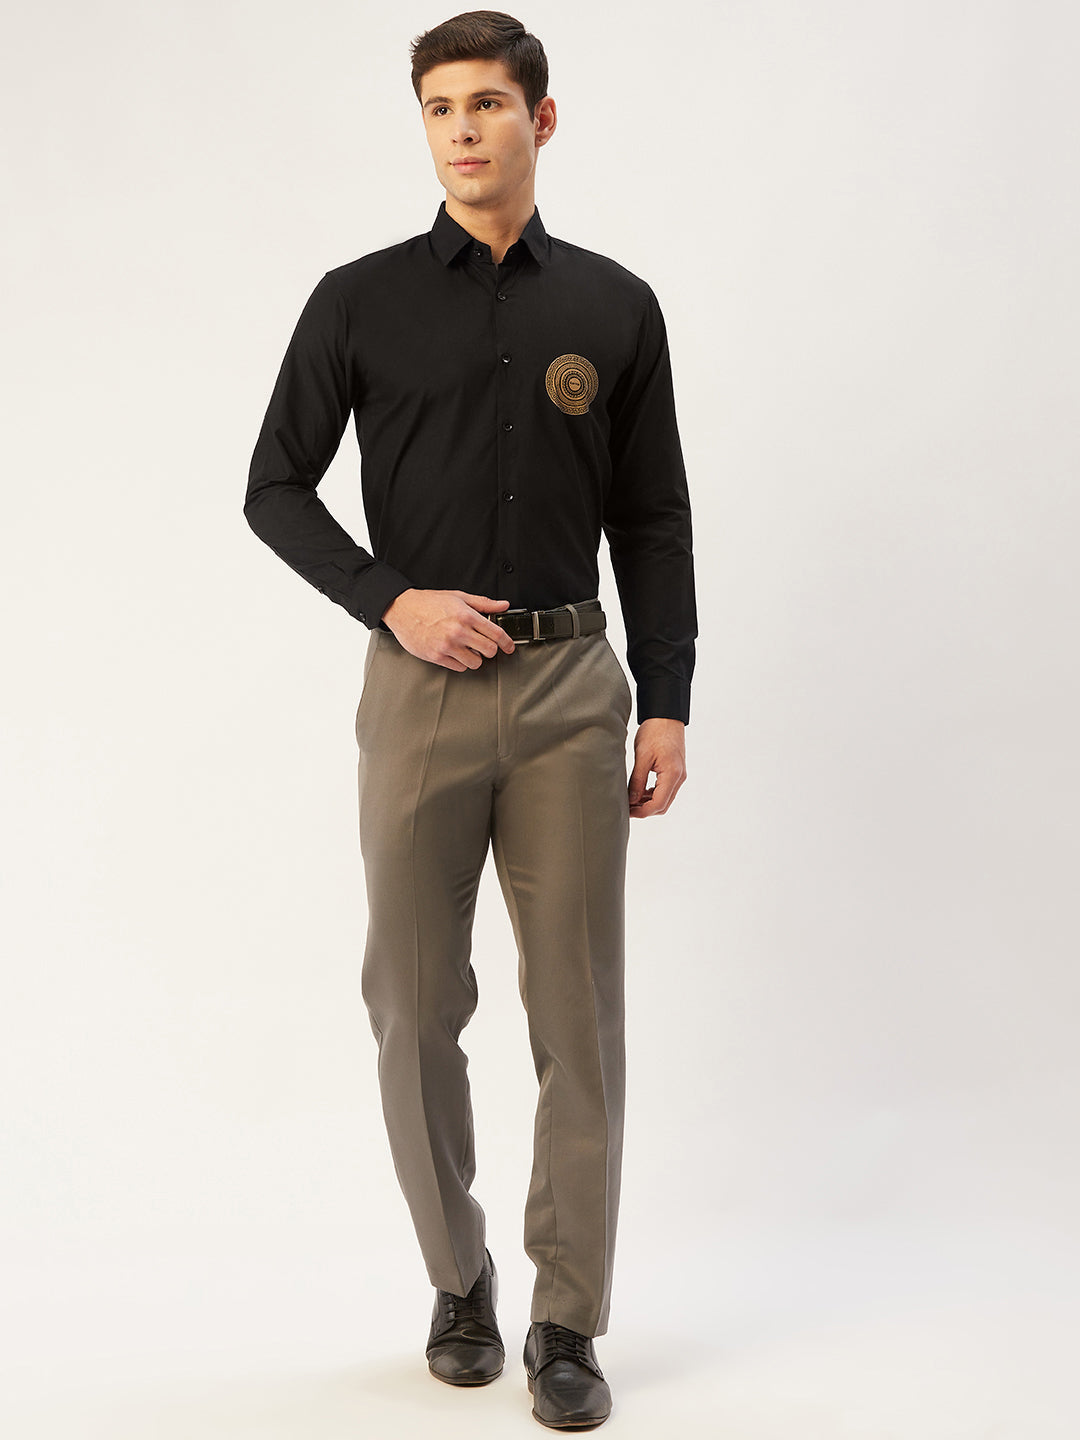 Men's Cotton Printed Formal Shirts ( SF 807Black ) - Jainish